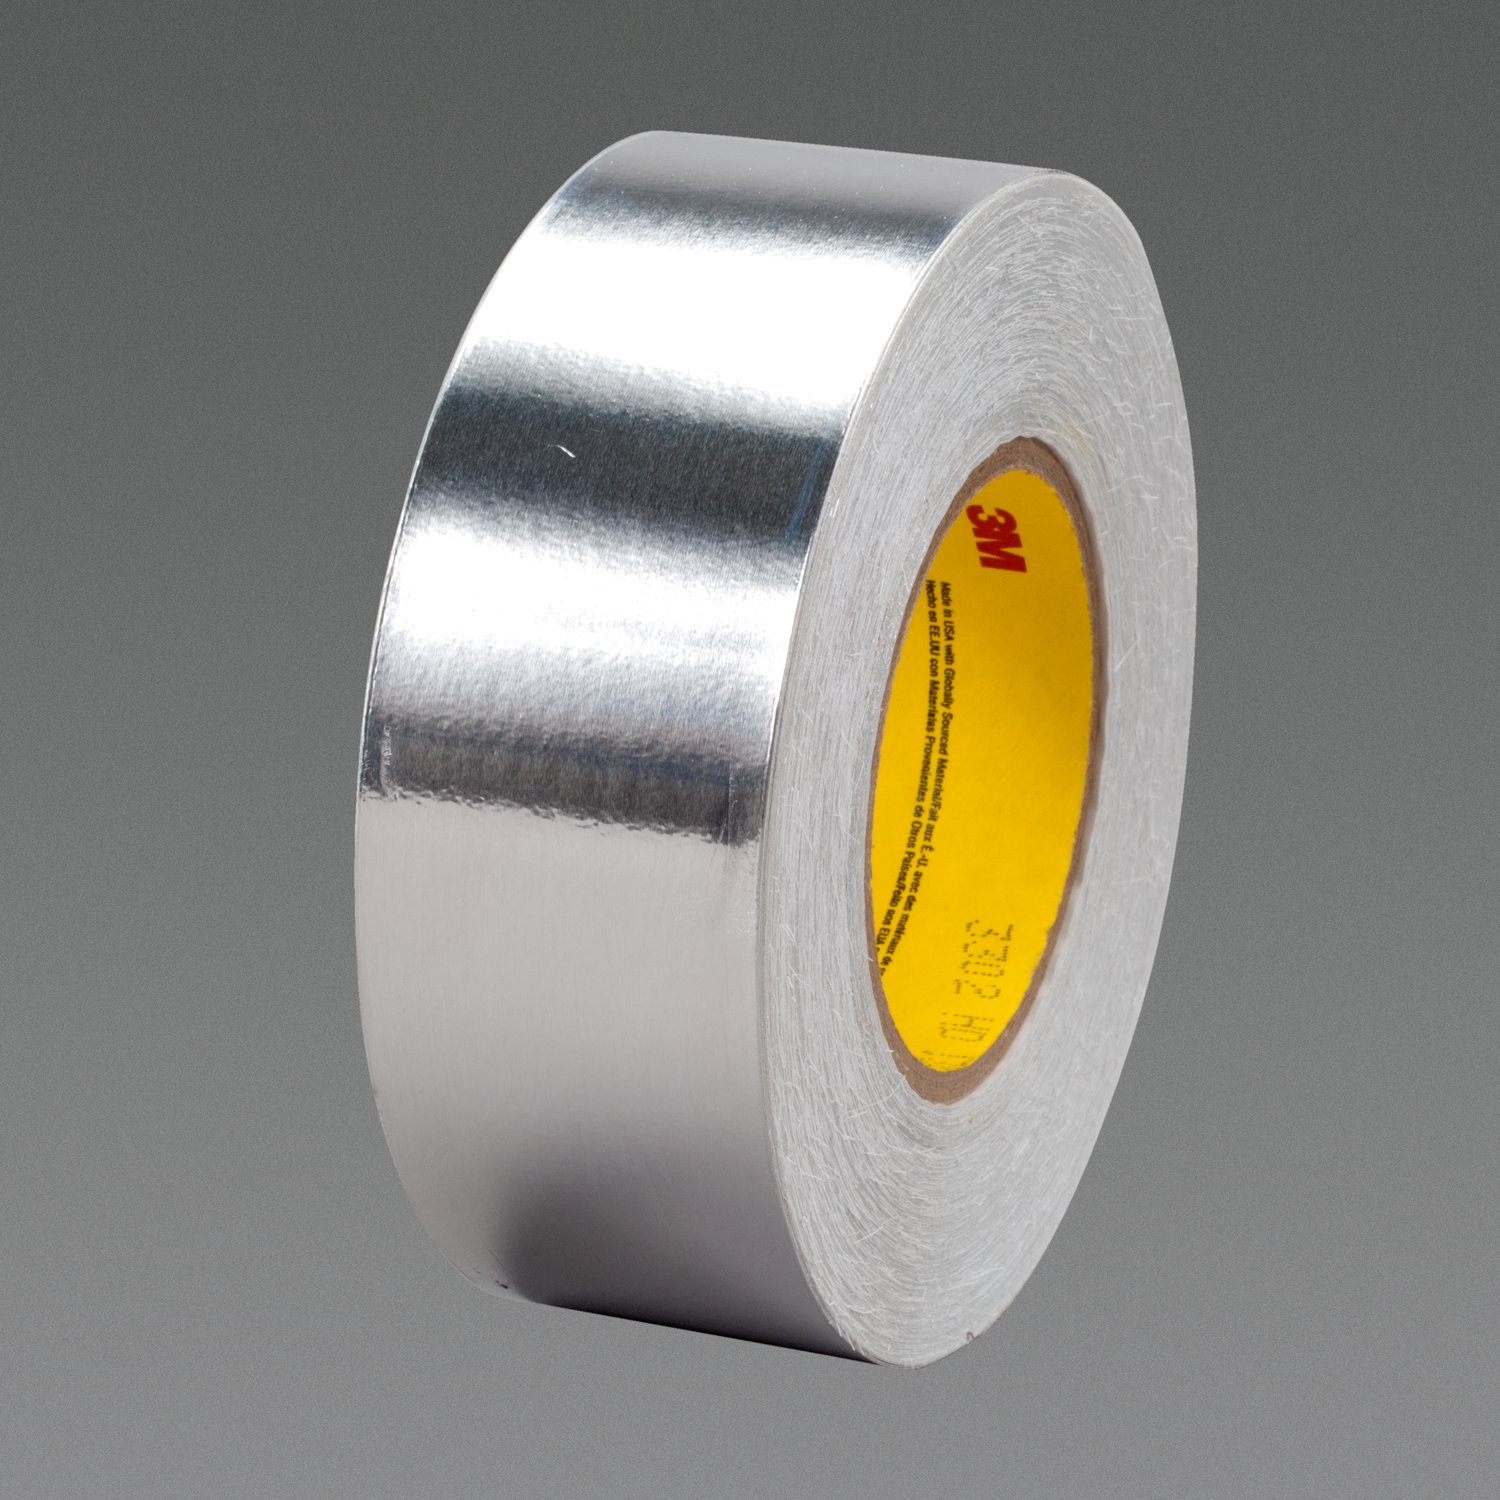 7010331859 - "3M Conductive Aluminum Foil Tape 3302, Silver, 4 in x 36 yd, 3.5 mil,
2
Rolls/Case"